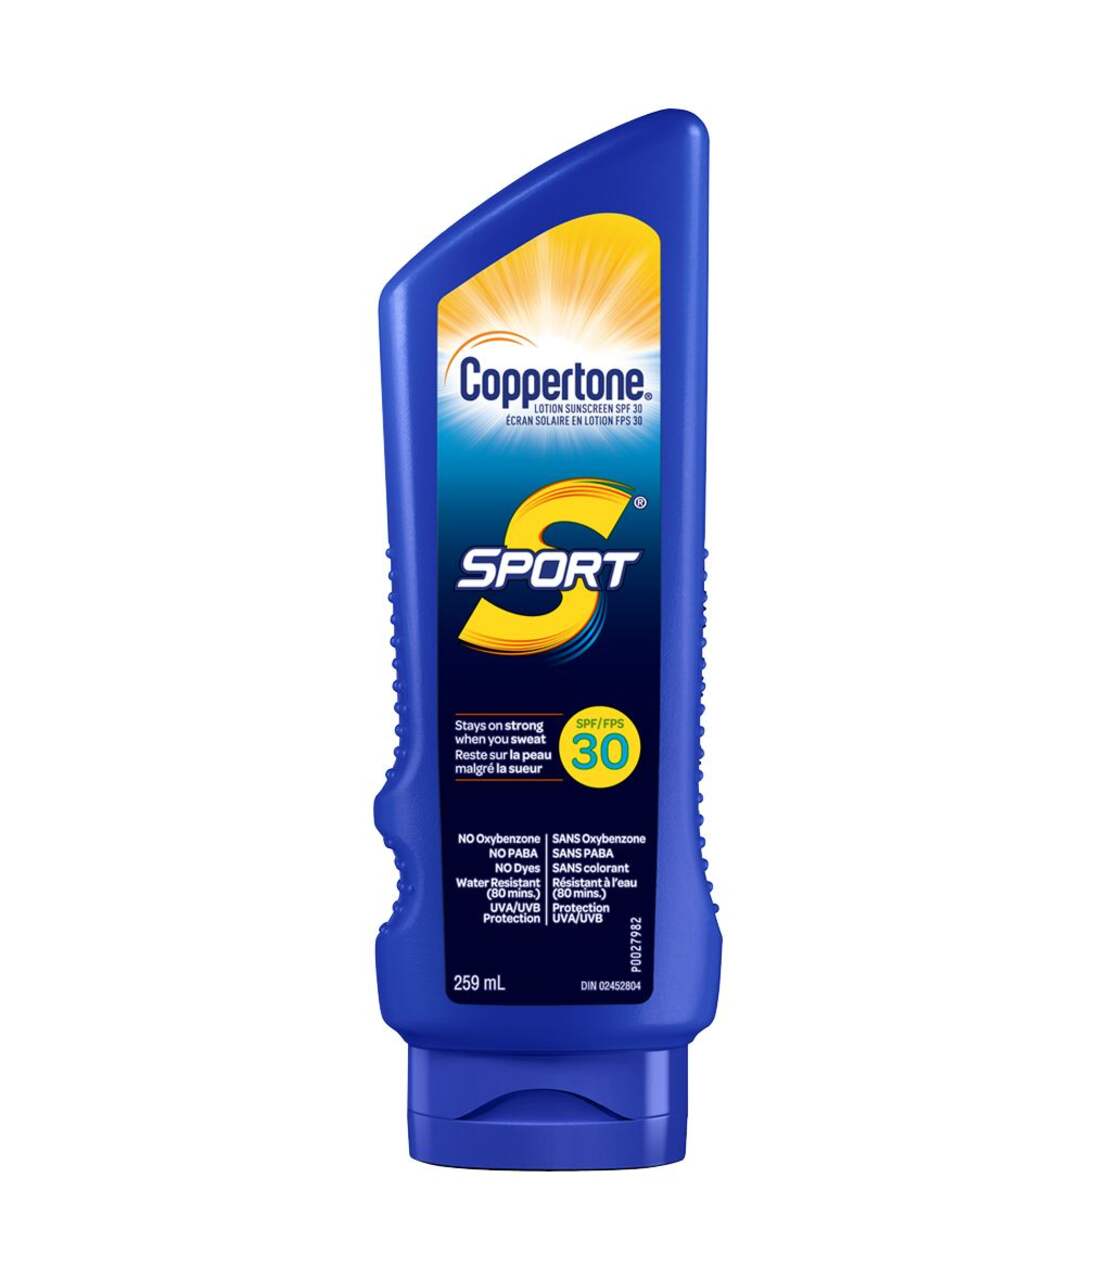 Sport Sunscreen Lotion SPF30 - Dermatone